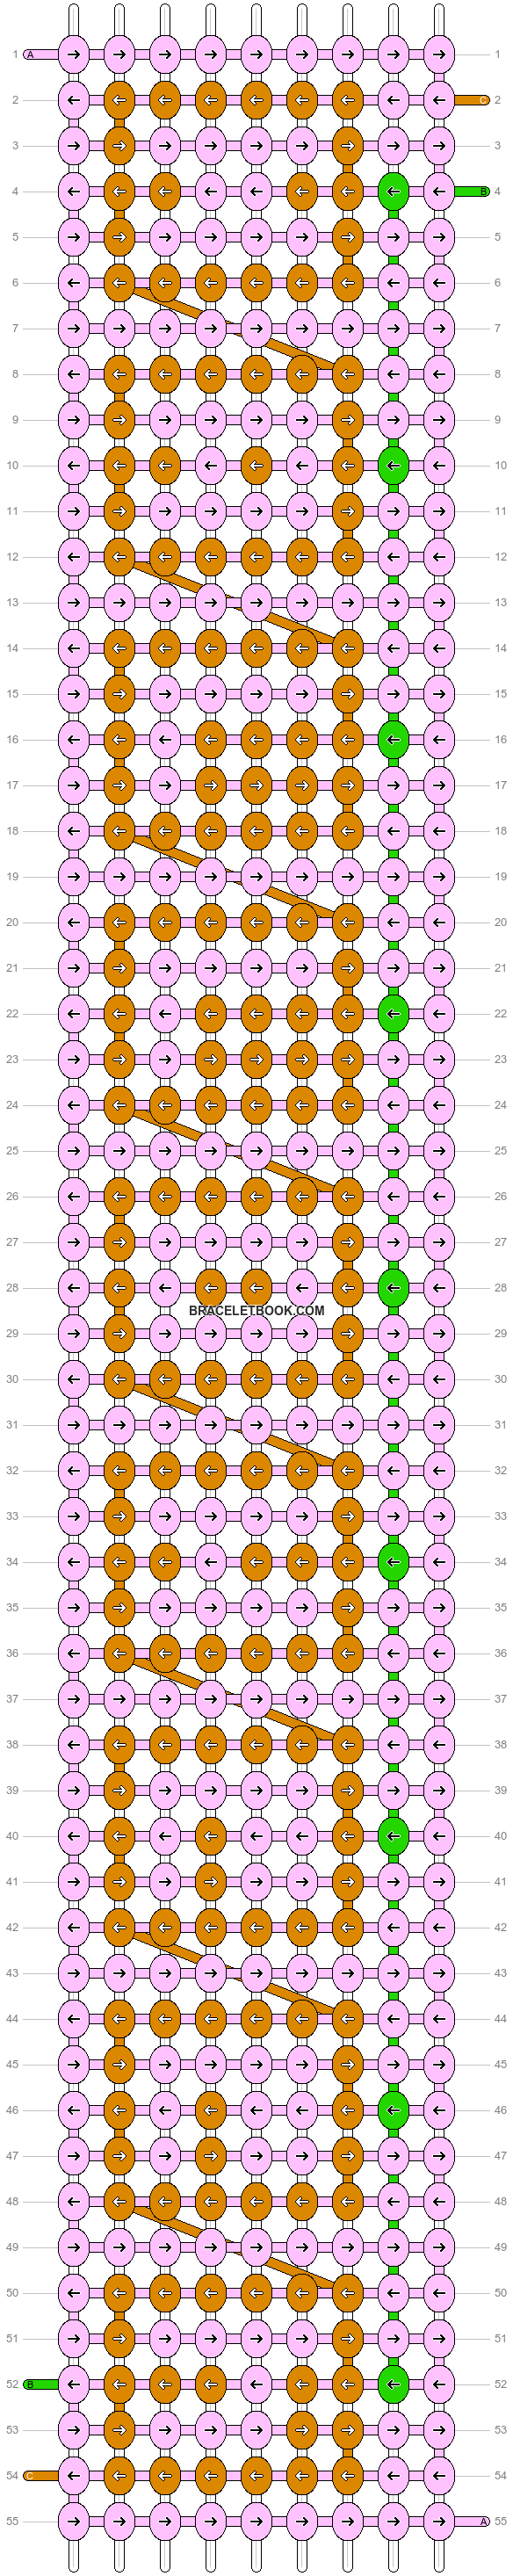 Alpha pattern #11481 variation #106377 pattern